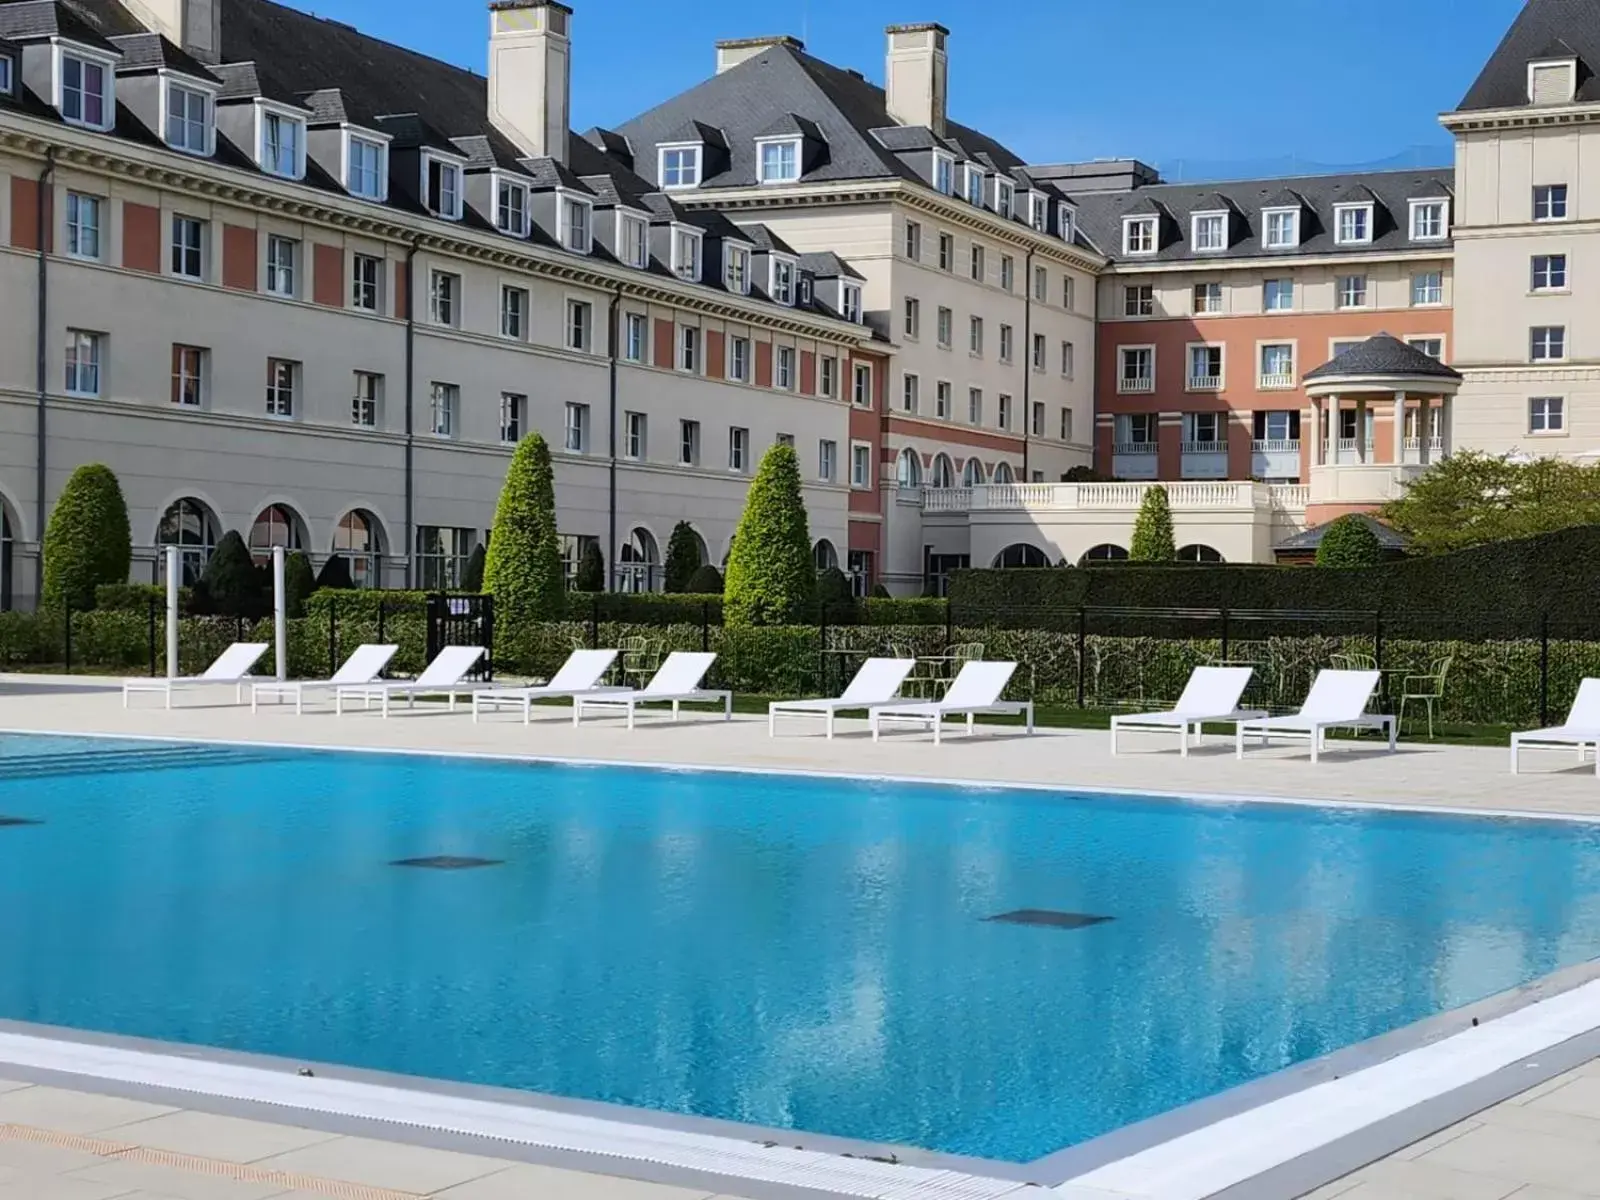 Swimming pool, Property Building in Dream Castle Hotel Marne La Vallee